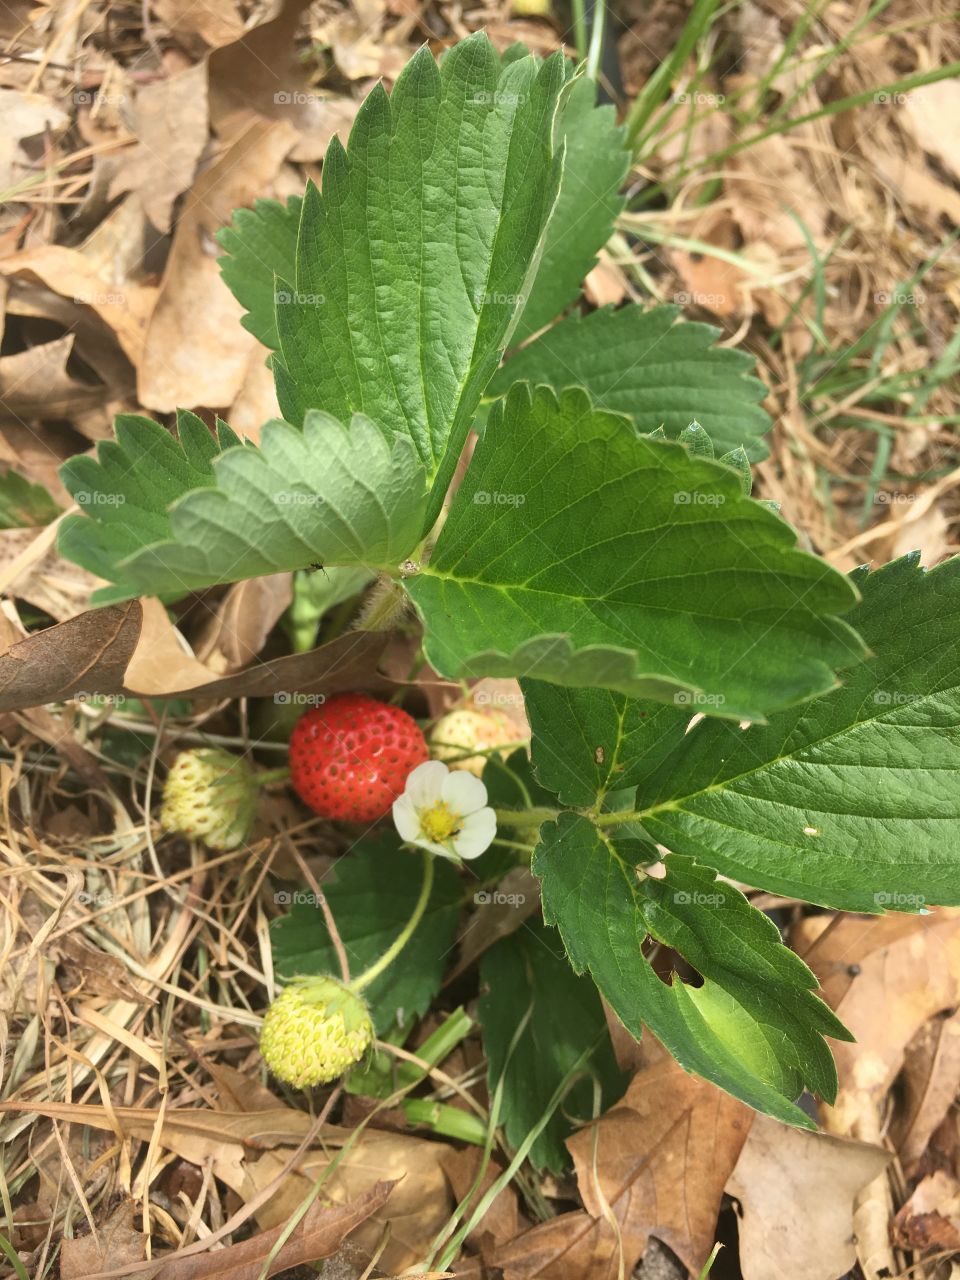 Closeup of a strawberry plant